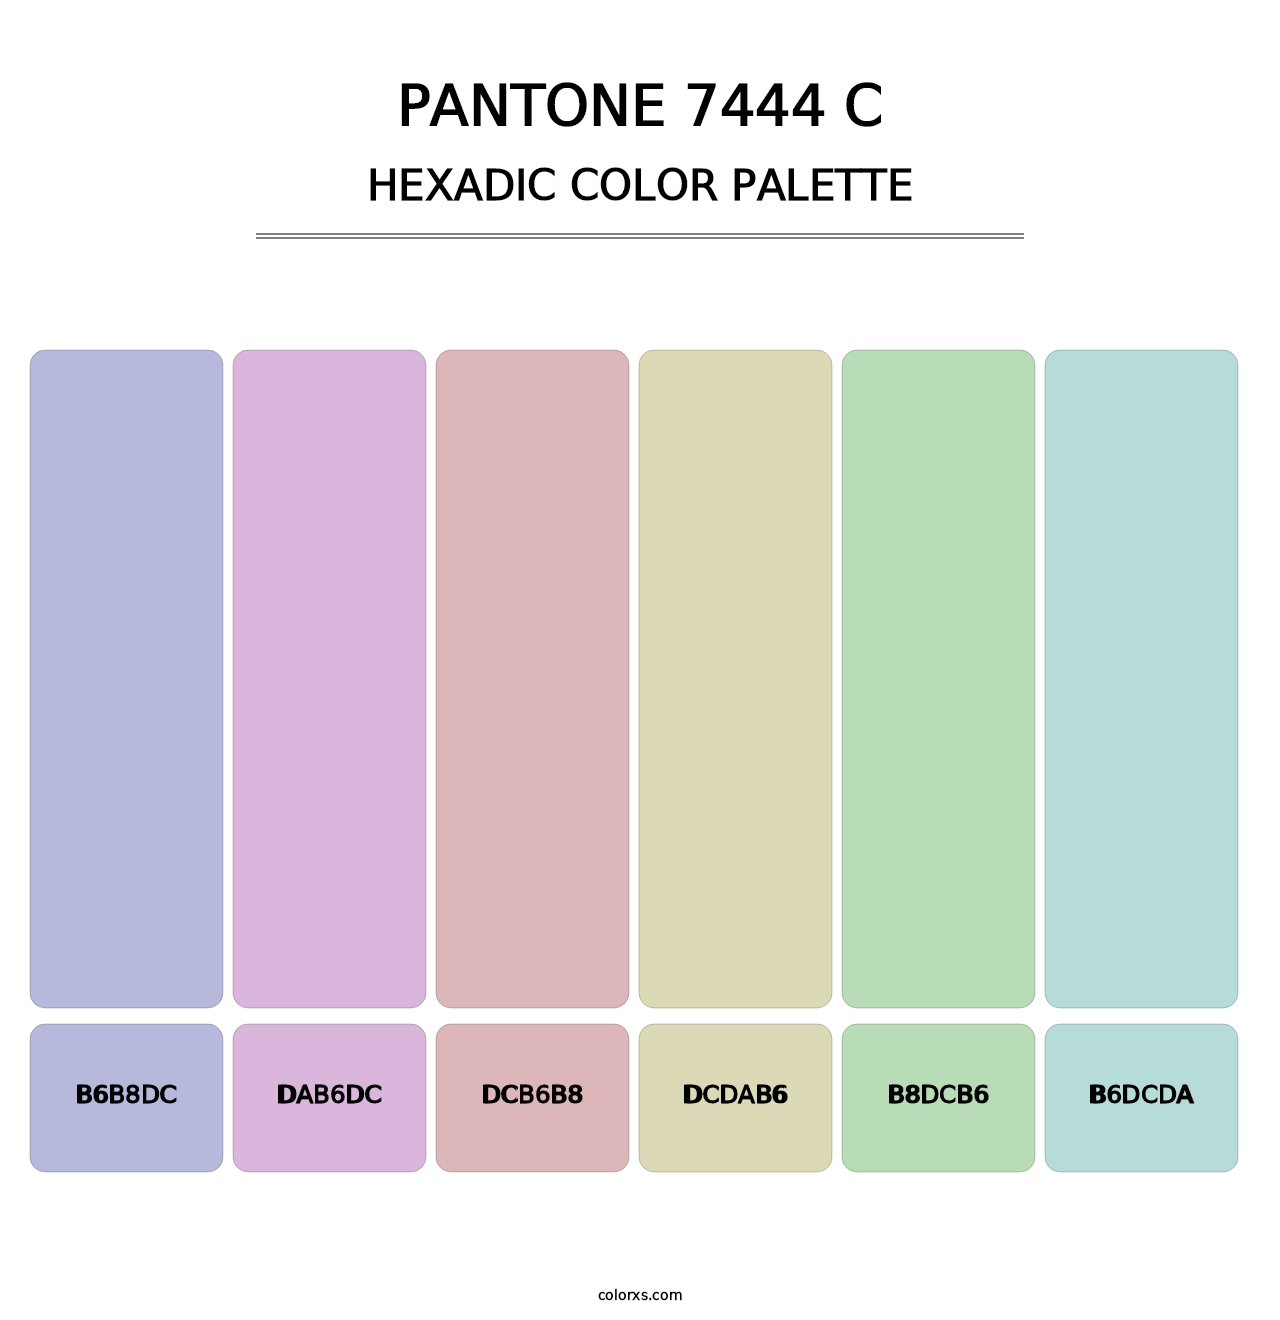 PANTONE 7444 C - Hexadic Color Palette